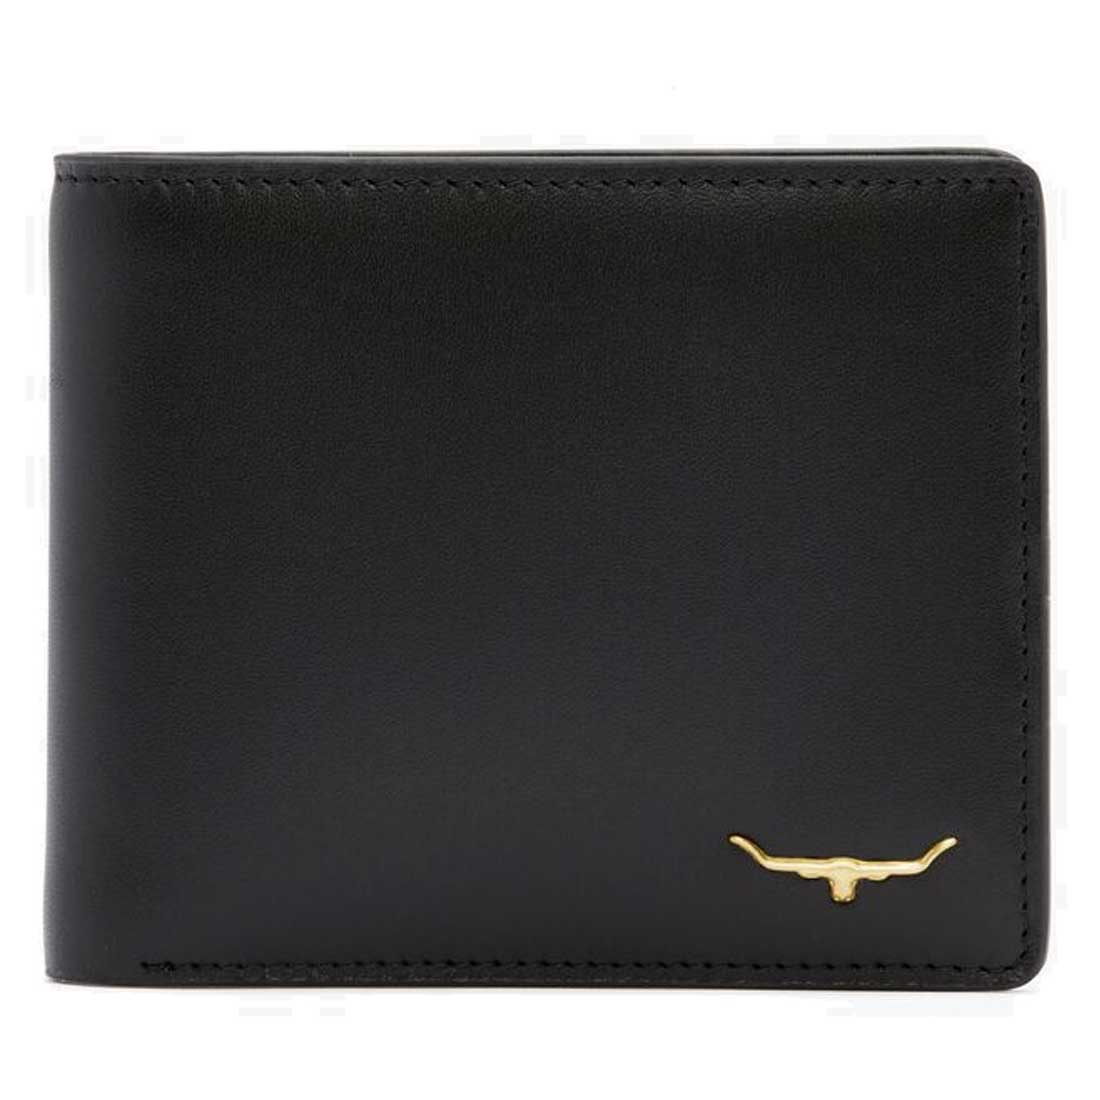 RM WILLIAMS Bi-Fold Wallet - Men's City Slim Leather - Black